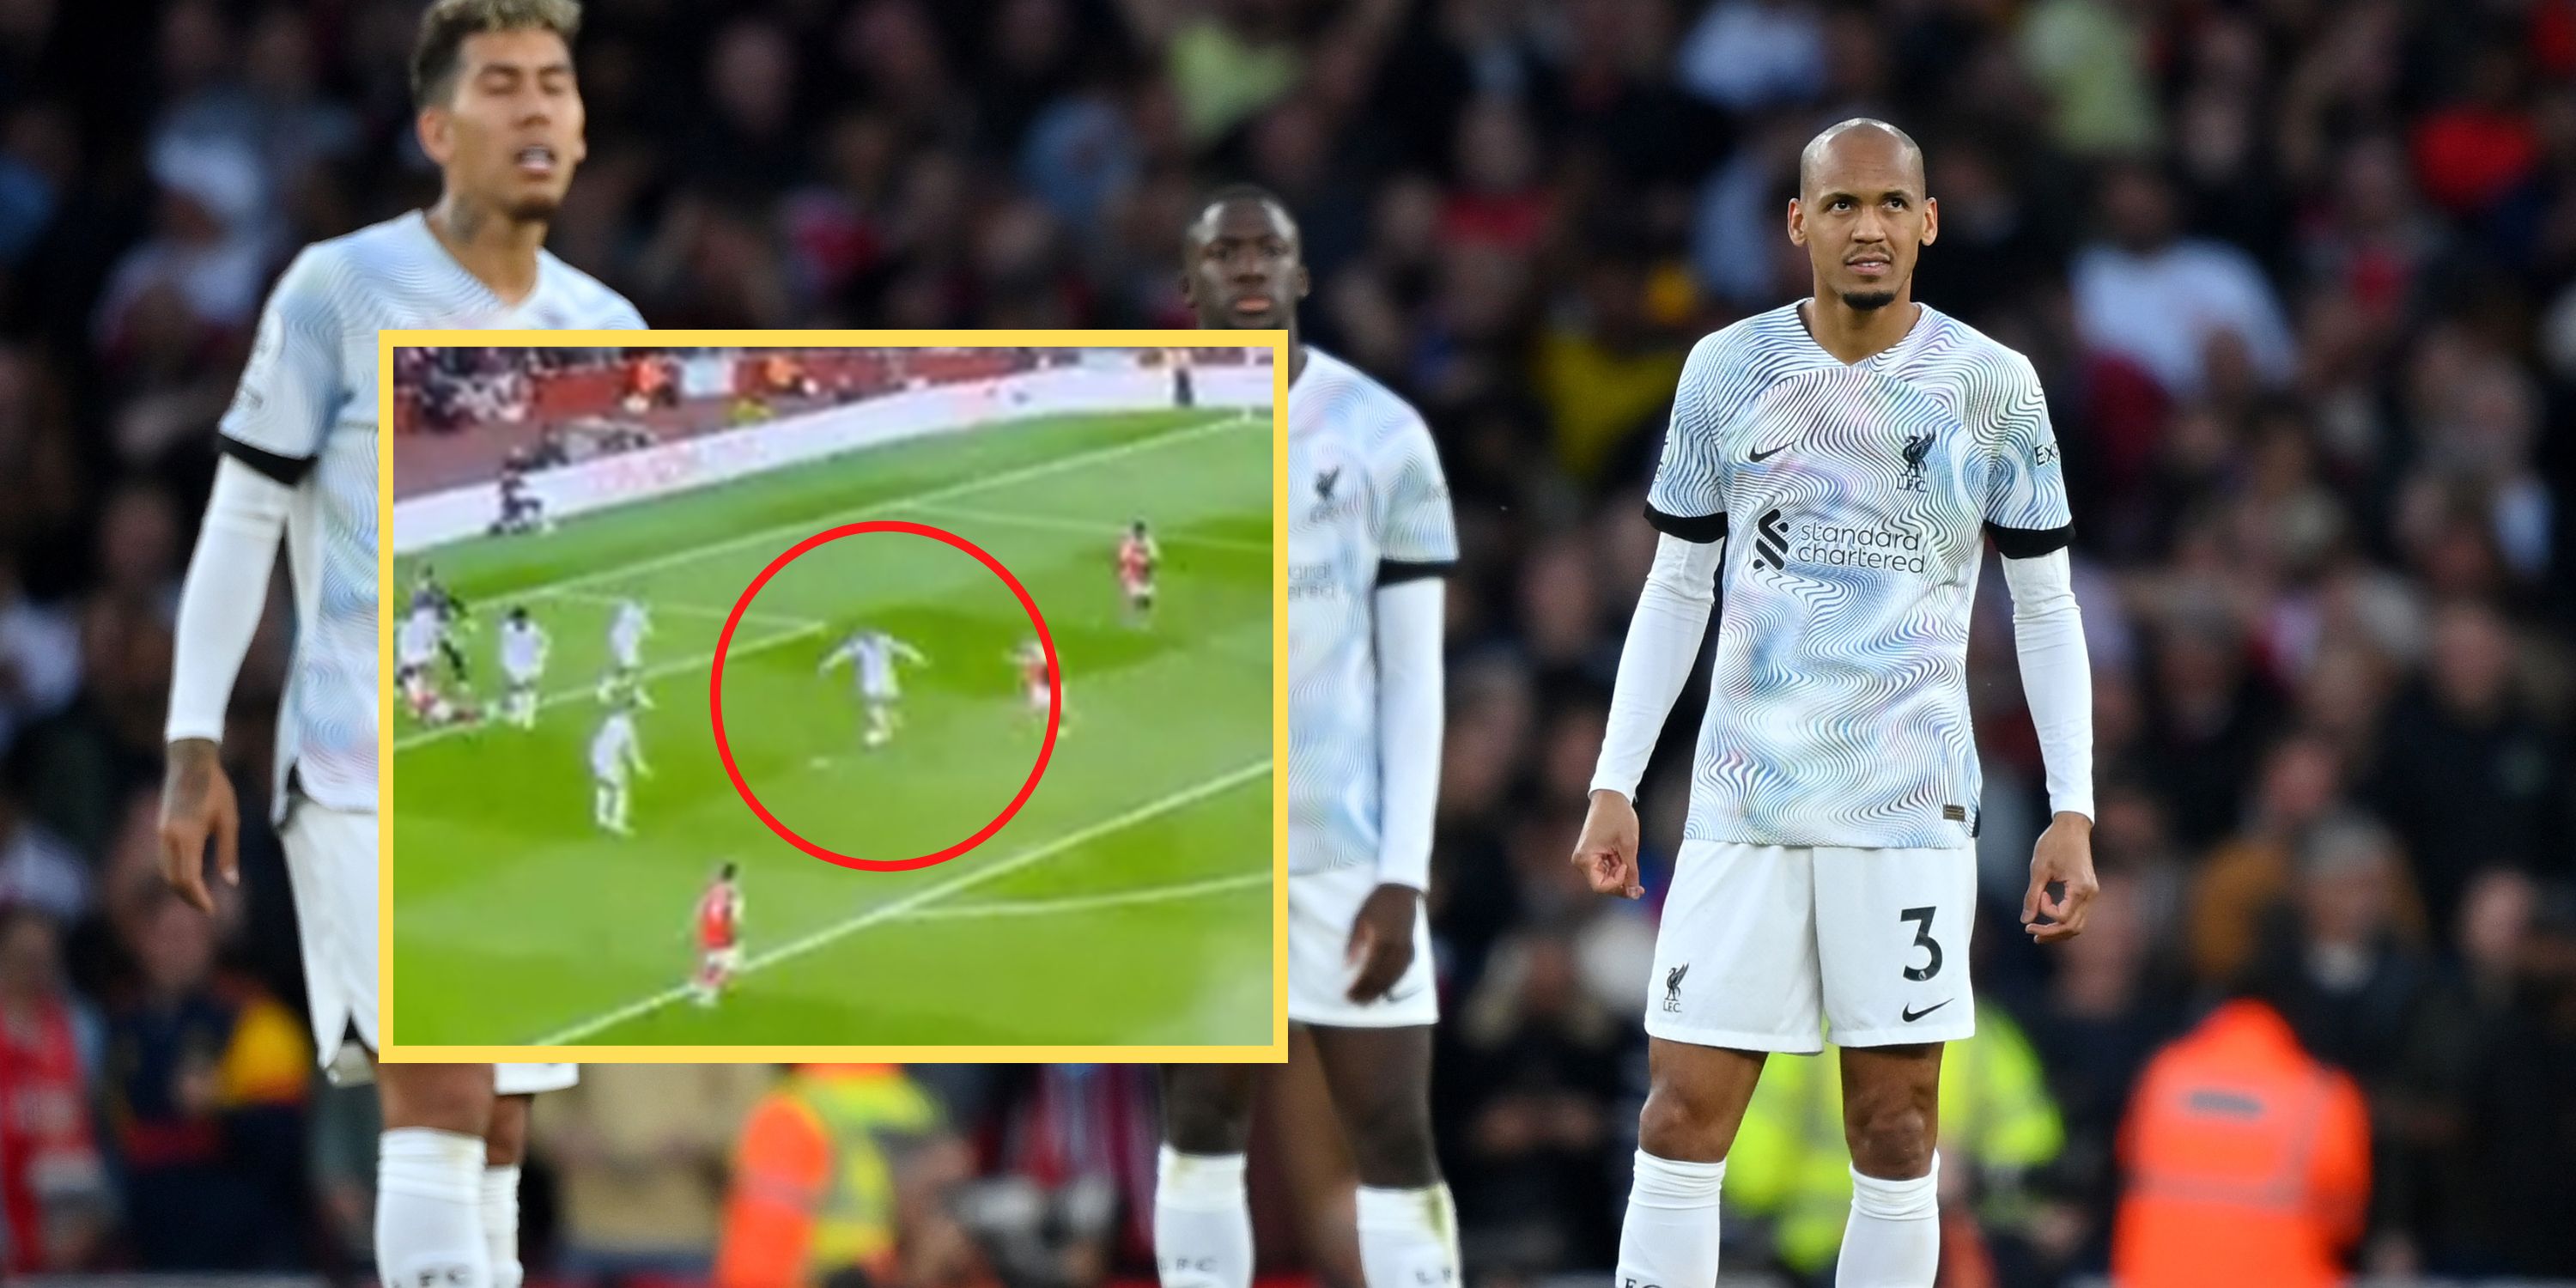 (Video) Sky pundit spots confusing Fabinho moment during Arsenal defeat